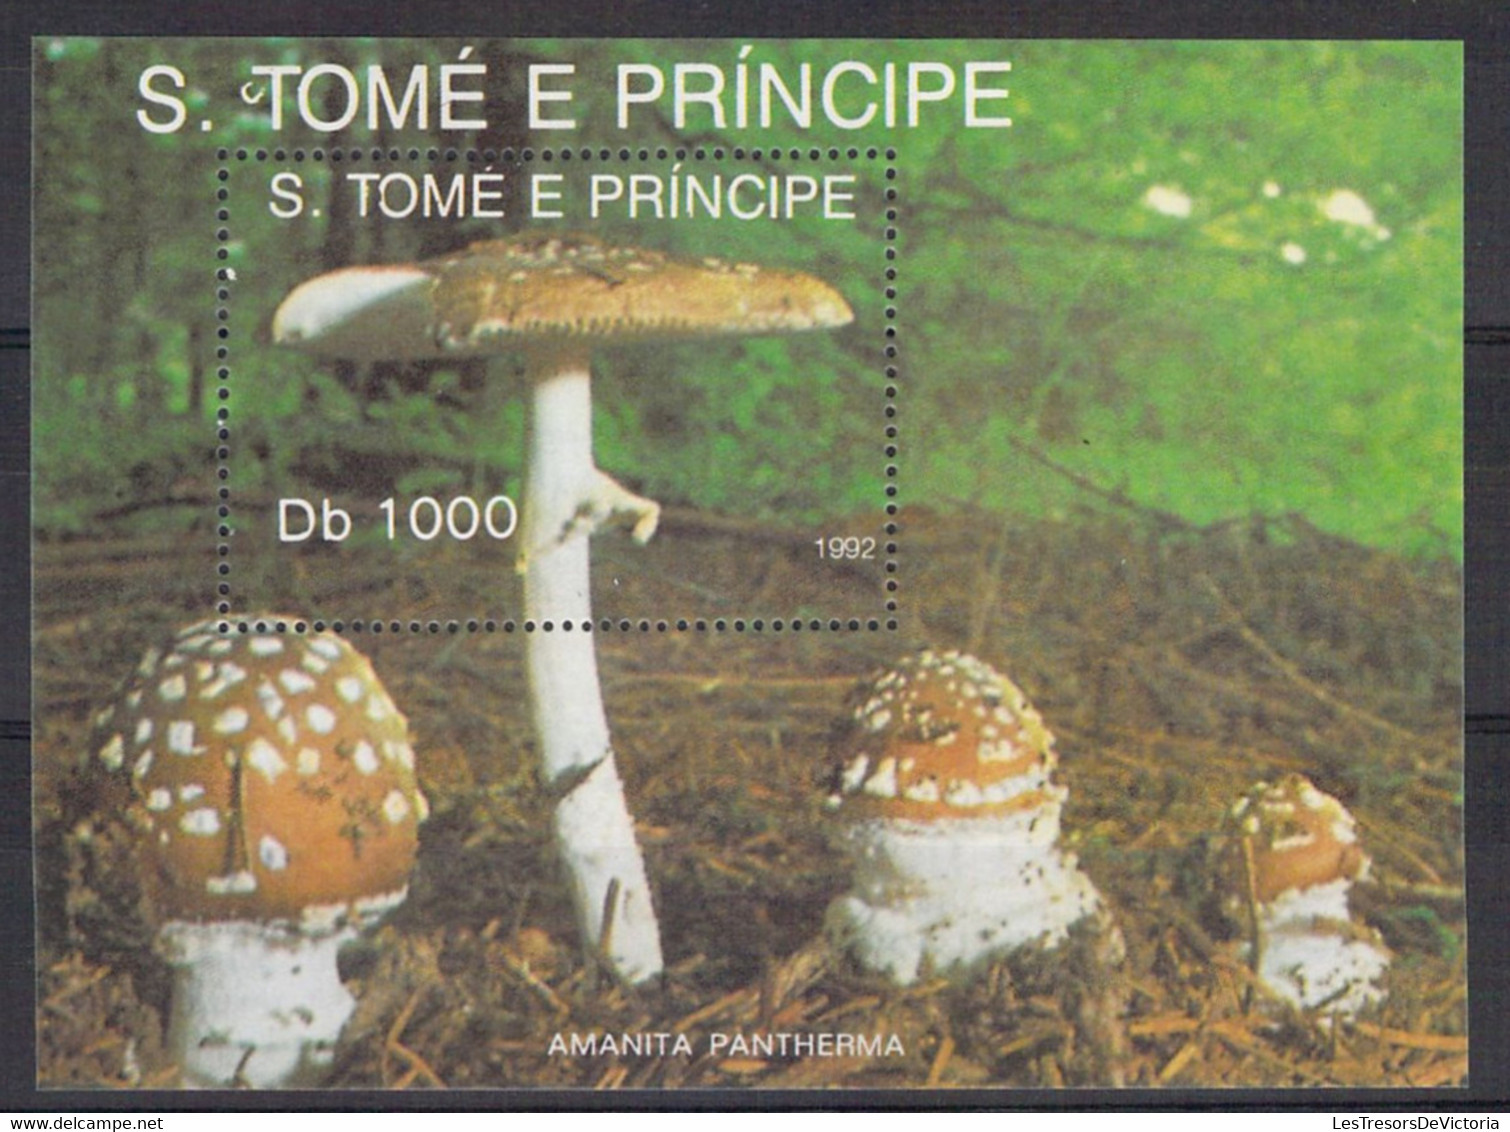 Lot Timbres et blocs thème champignon - Mushroom - S Tome e principe